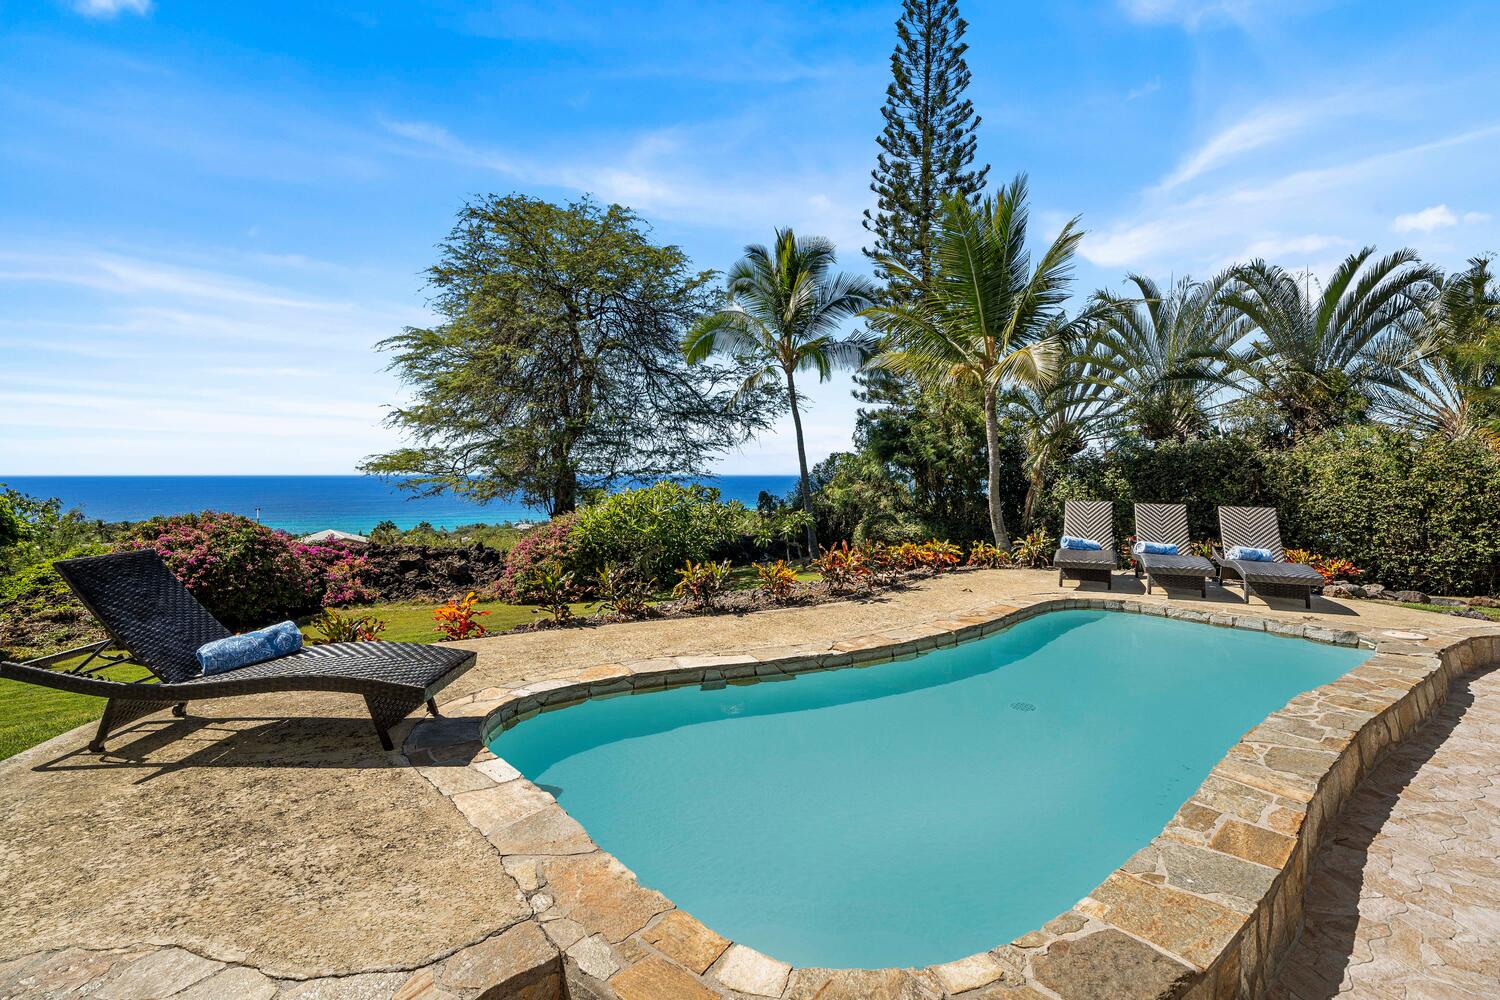 Kailua Kona Vacation Rentals, Ho'okipa Hale - Bask in the Hawaiian sunshine and refresh with a serene pool dip, right at your doorstep.